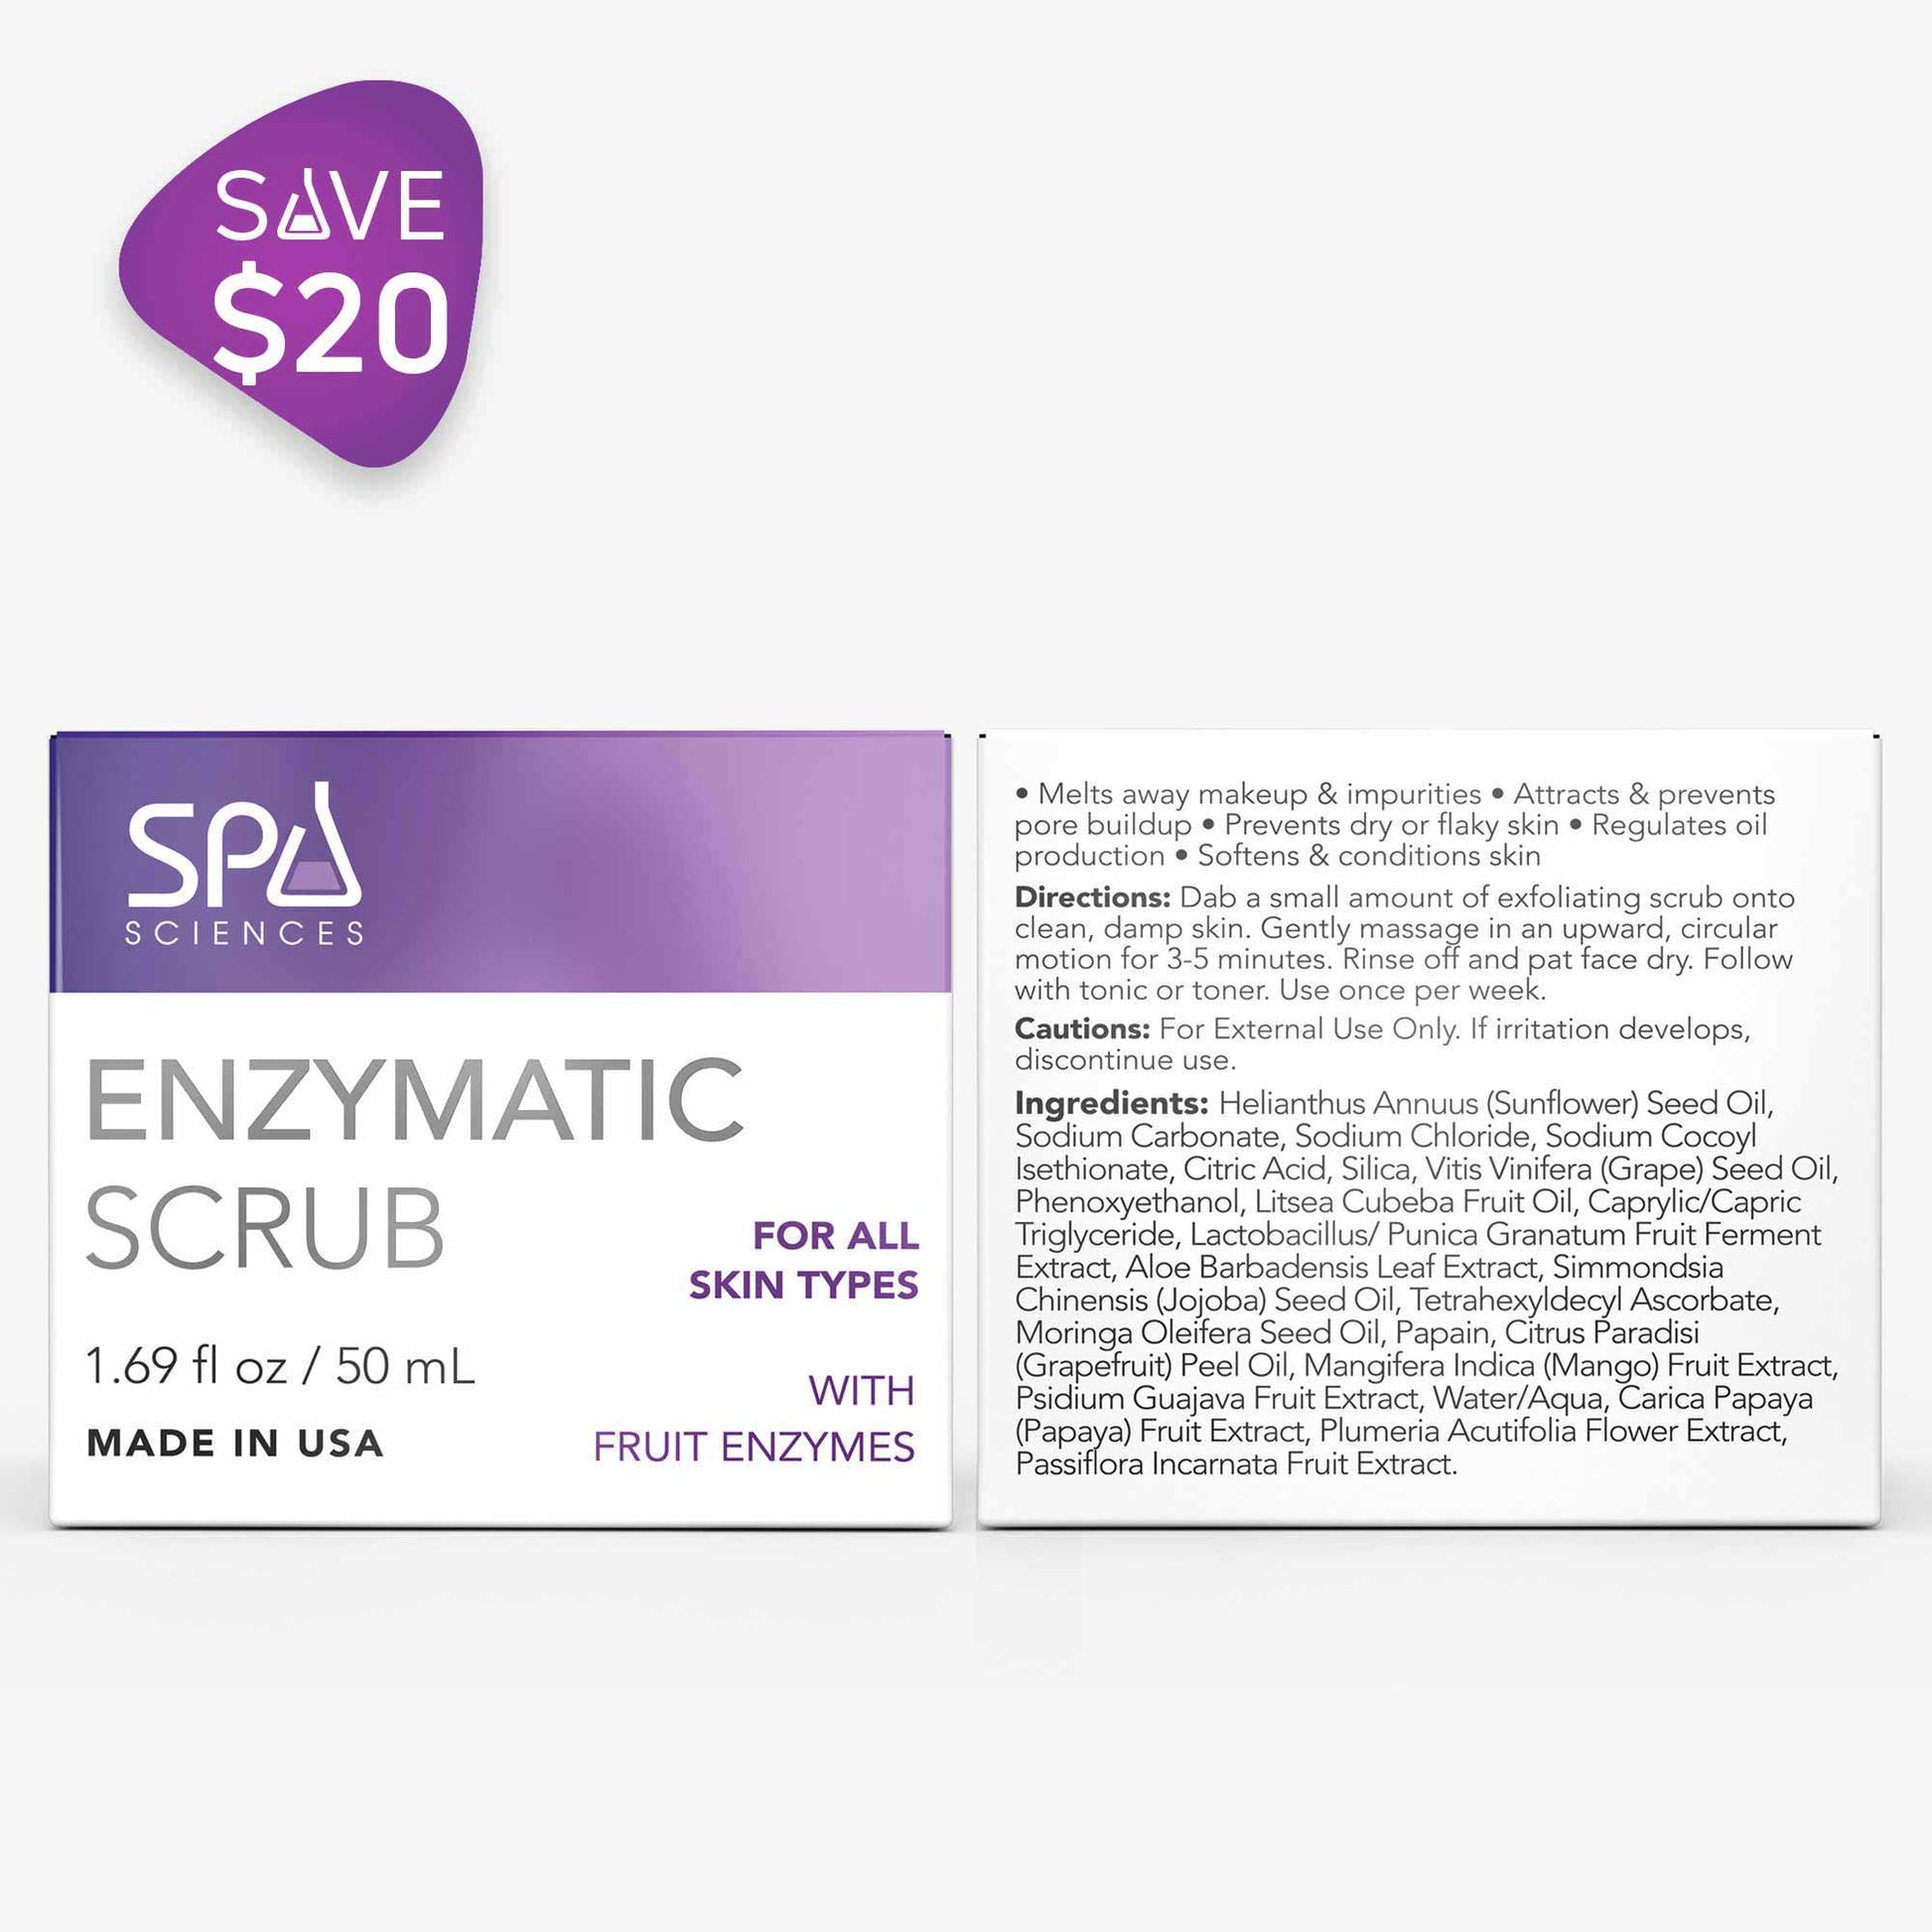 Spa Sciences enzymatic scrub - save $20.